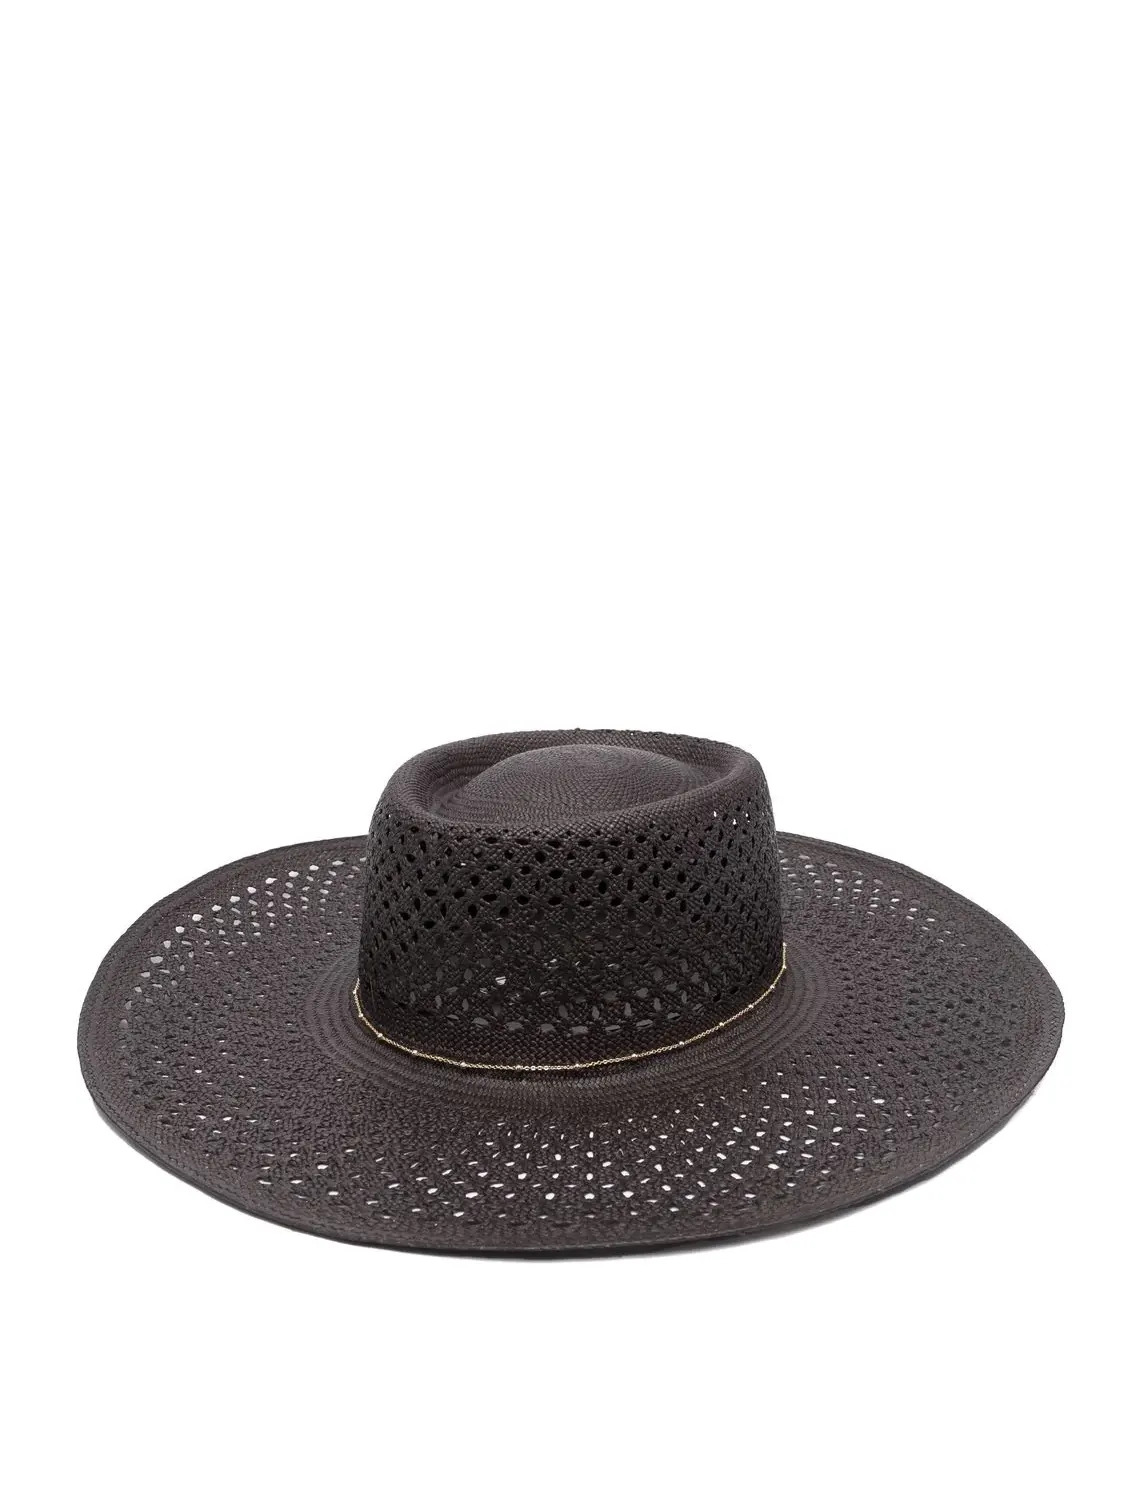 Opale Junior hat, black